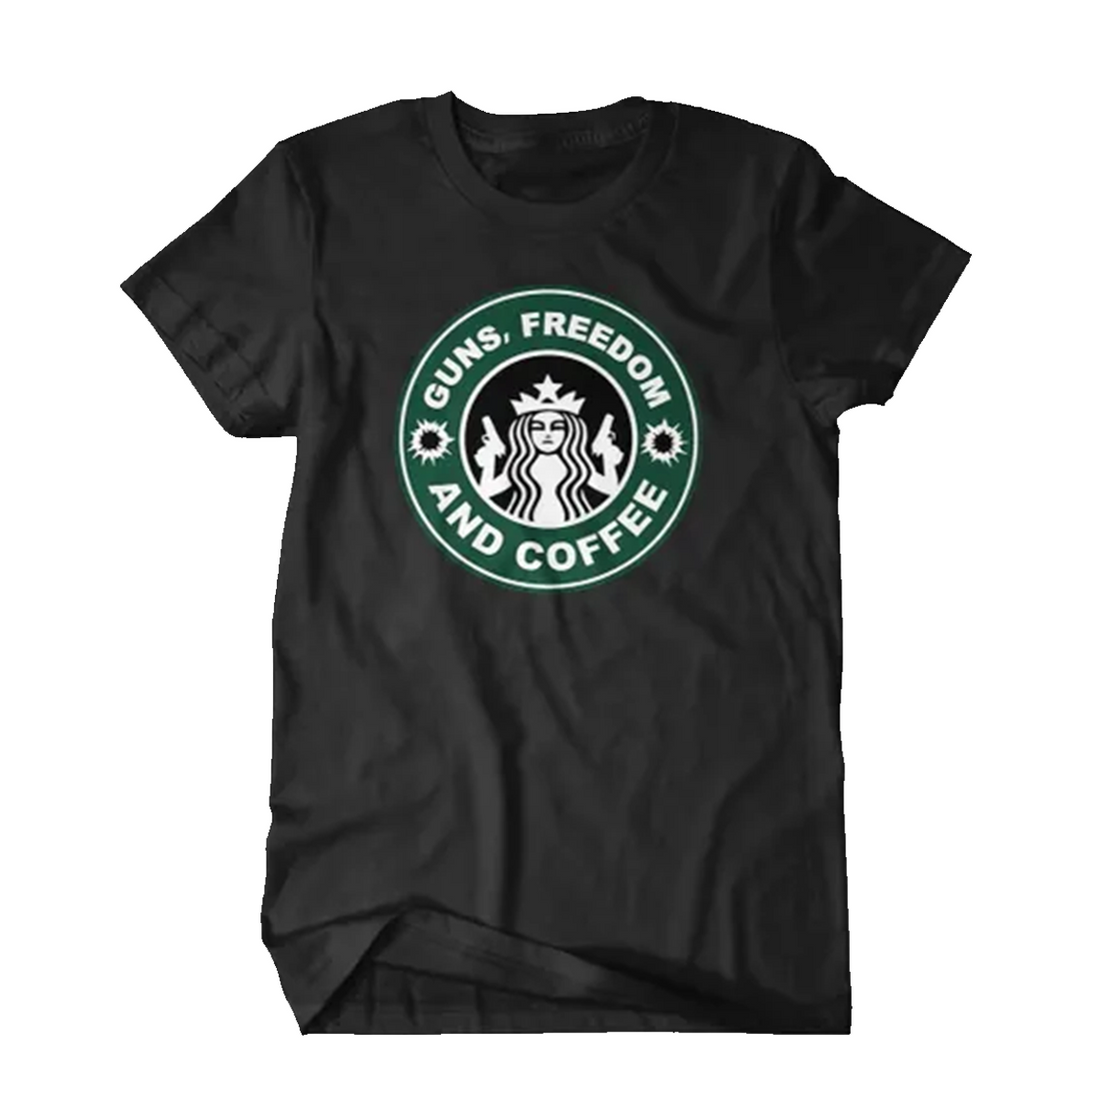 Guns, Freedom and Coffee T-Shirt